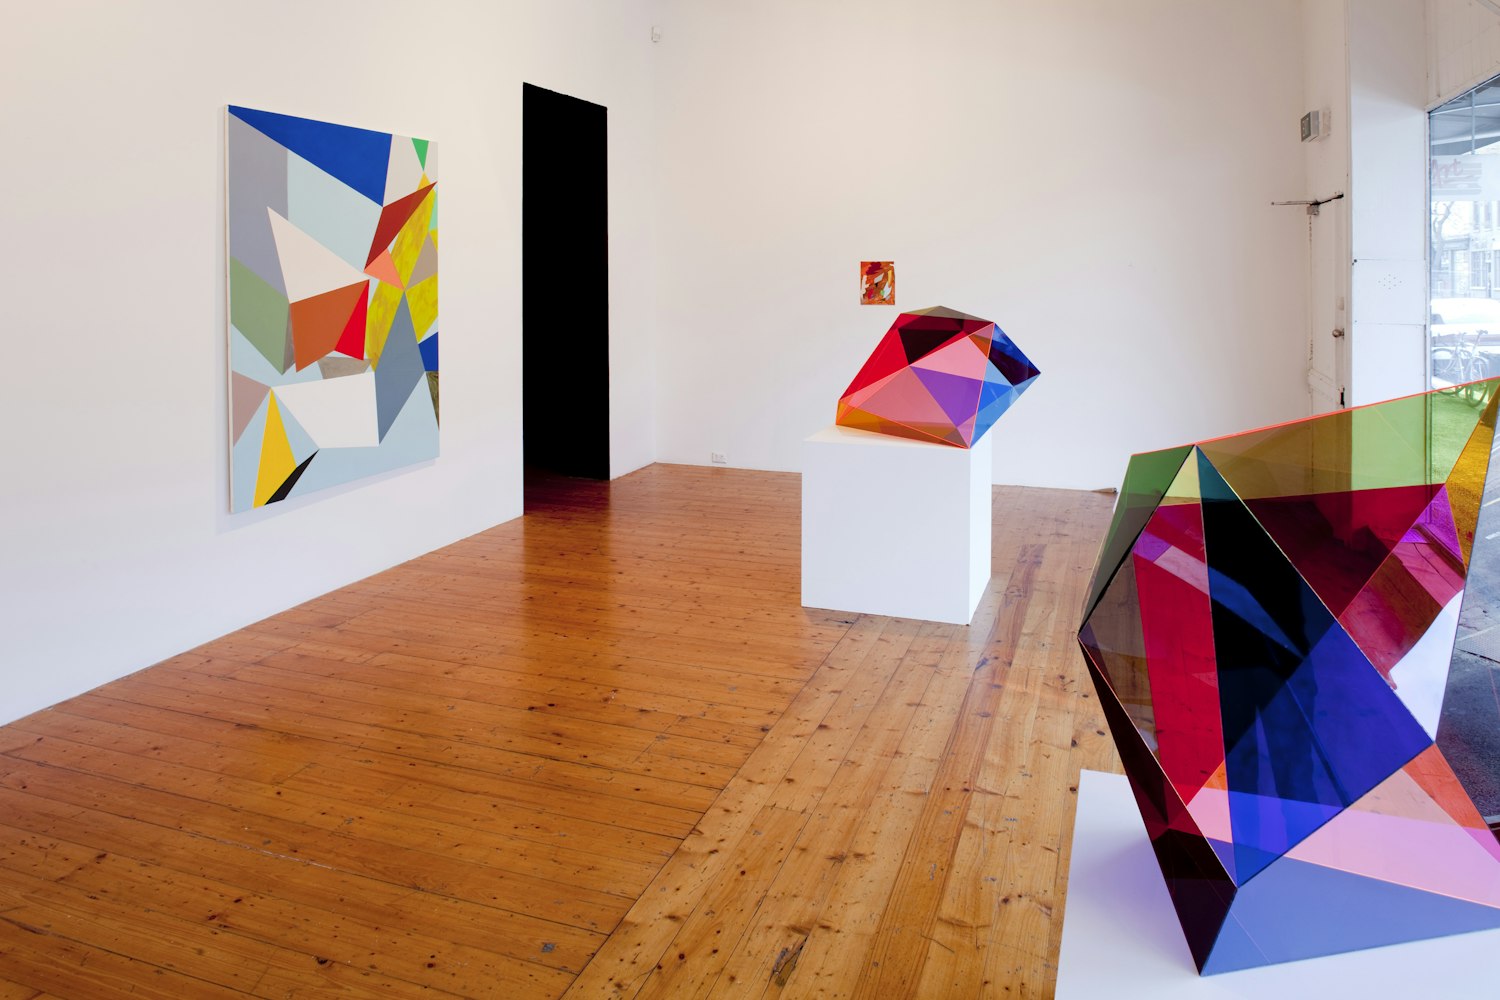 Gemma Smith, Entanglement Factor, 2009, installation at Gertrude Contemporary.